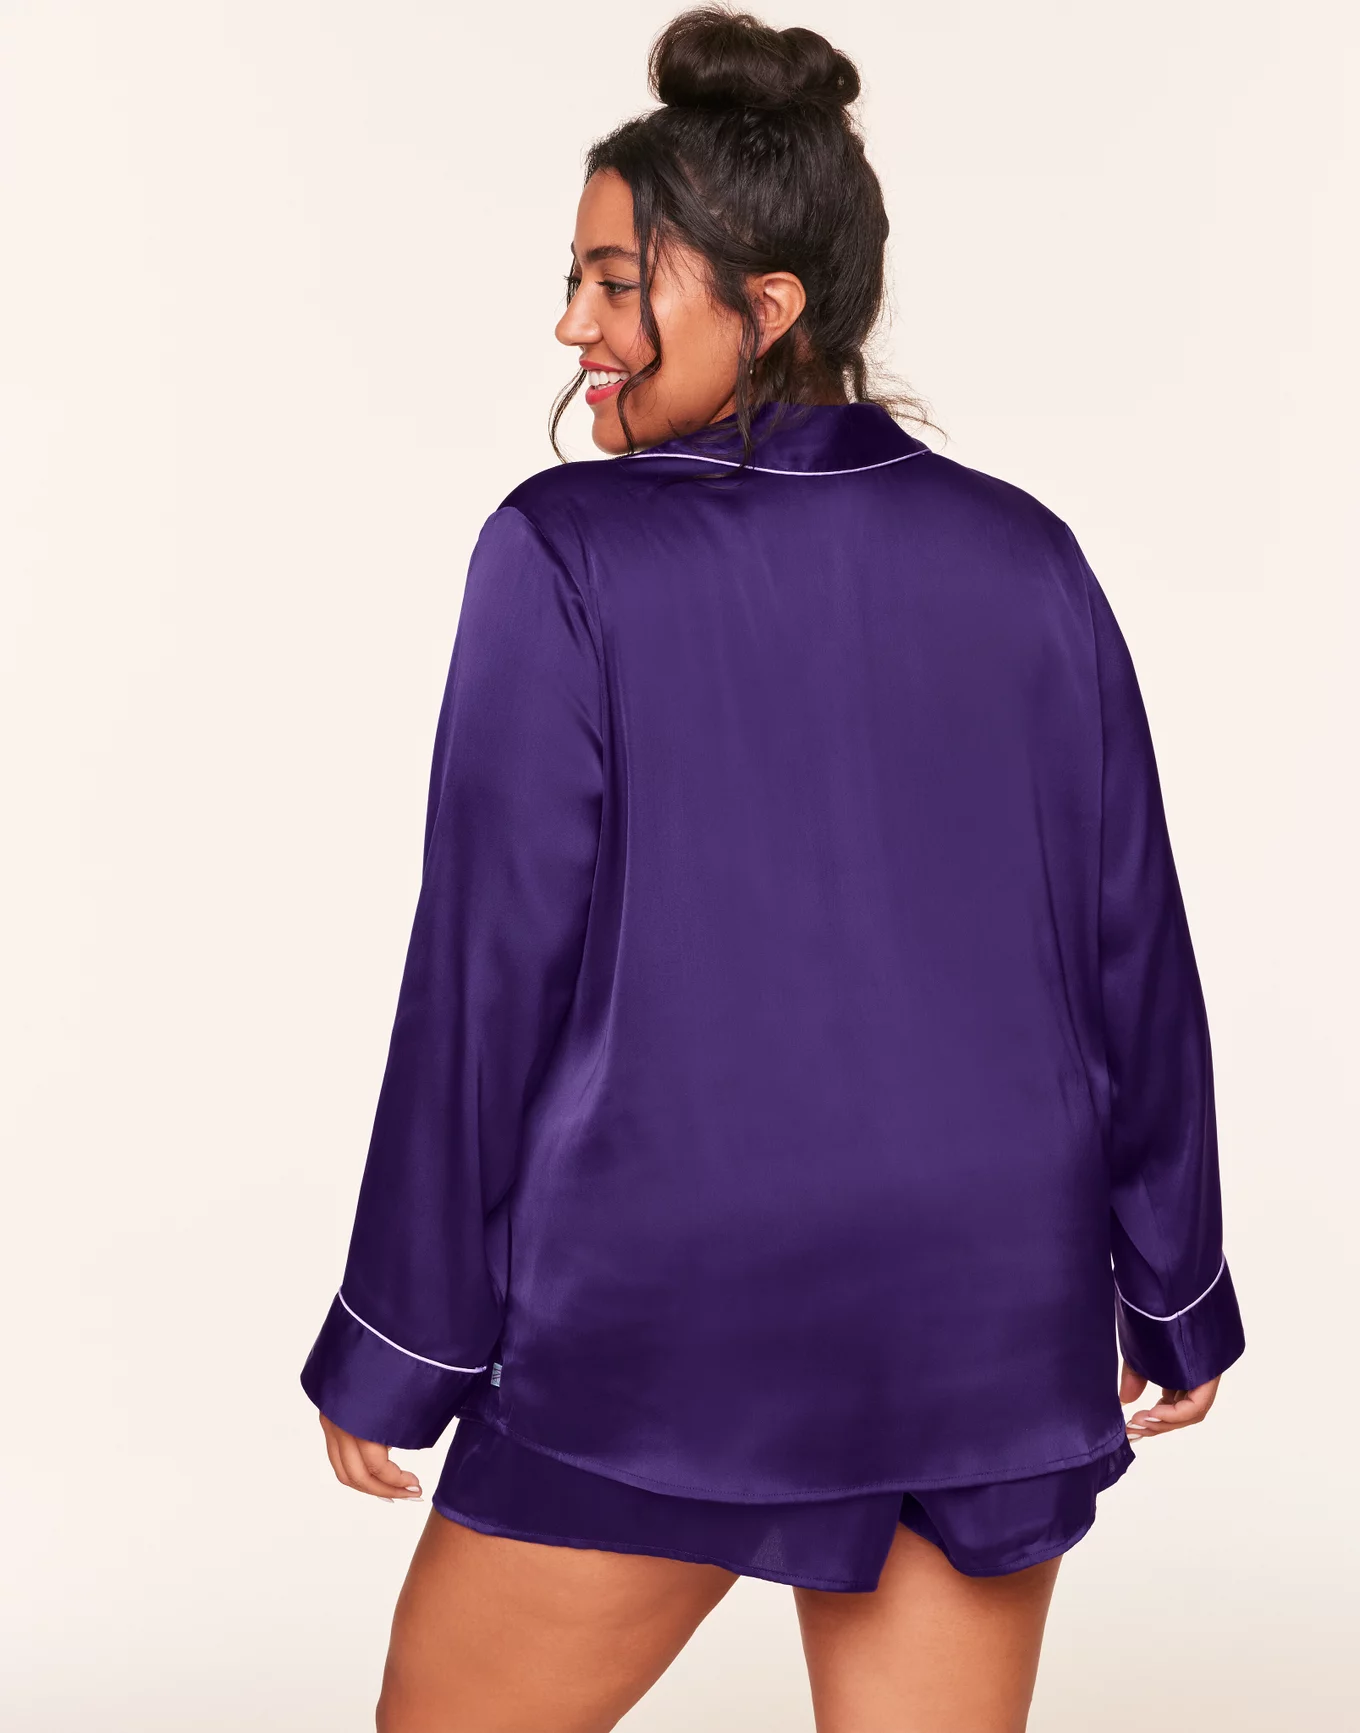 Buy Mauve Purple Rib Long Sleeve Pyjamas from the Laura Ashley online shop